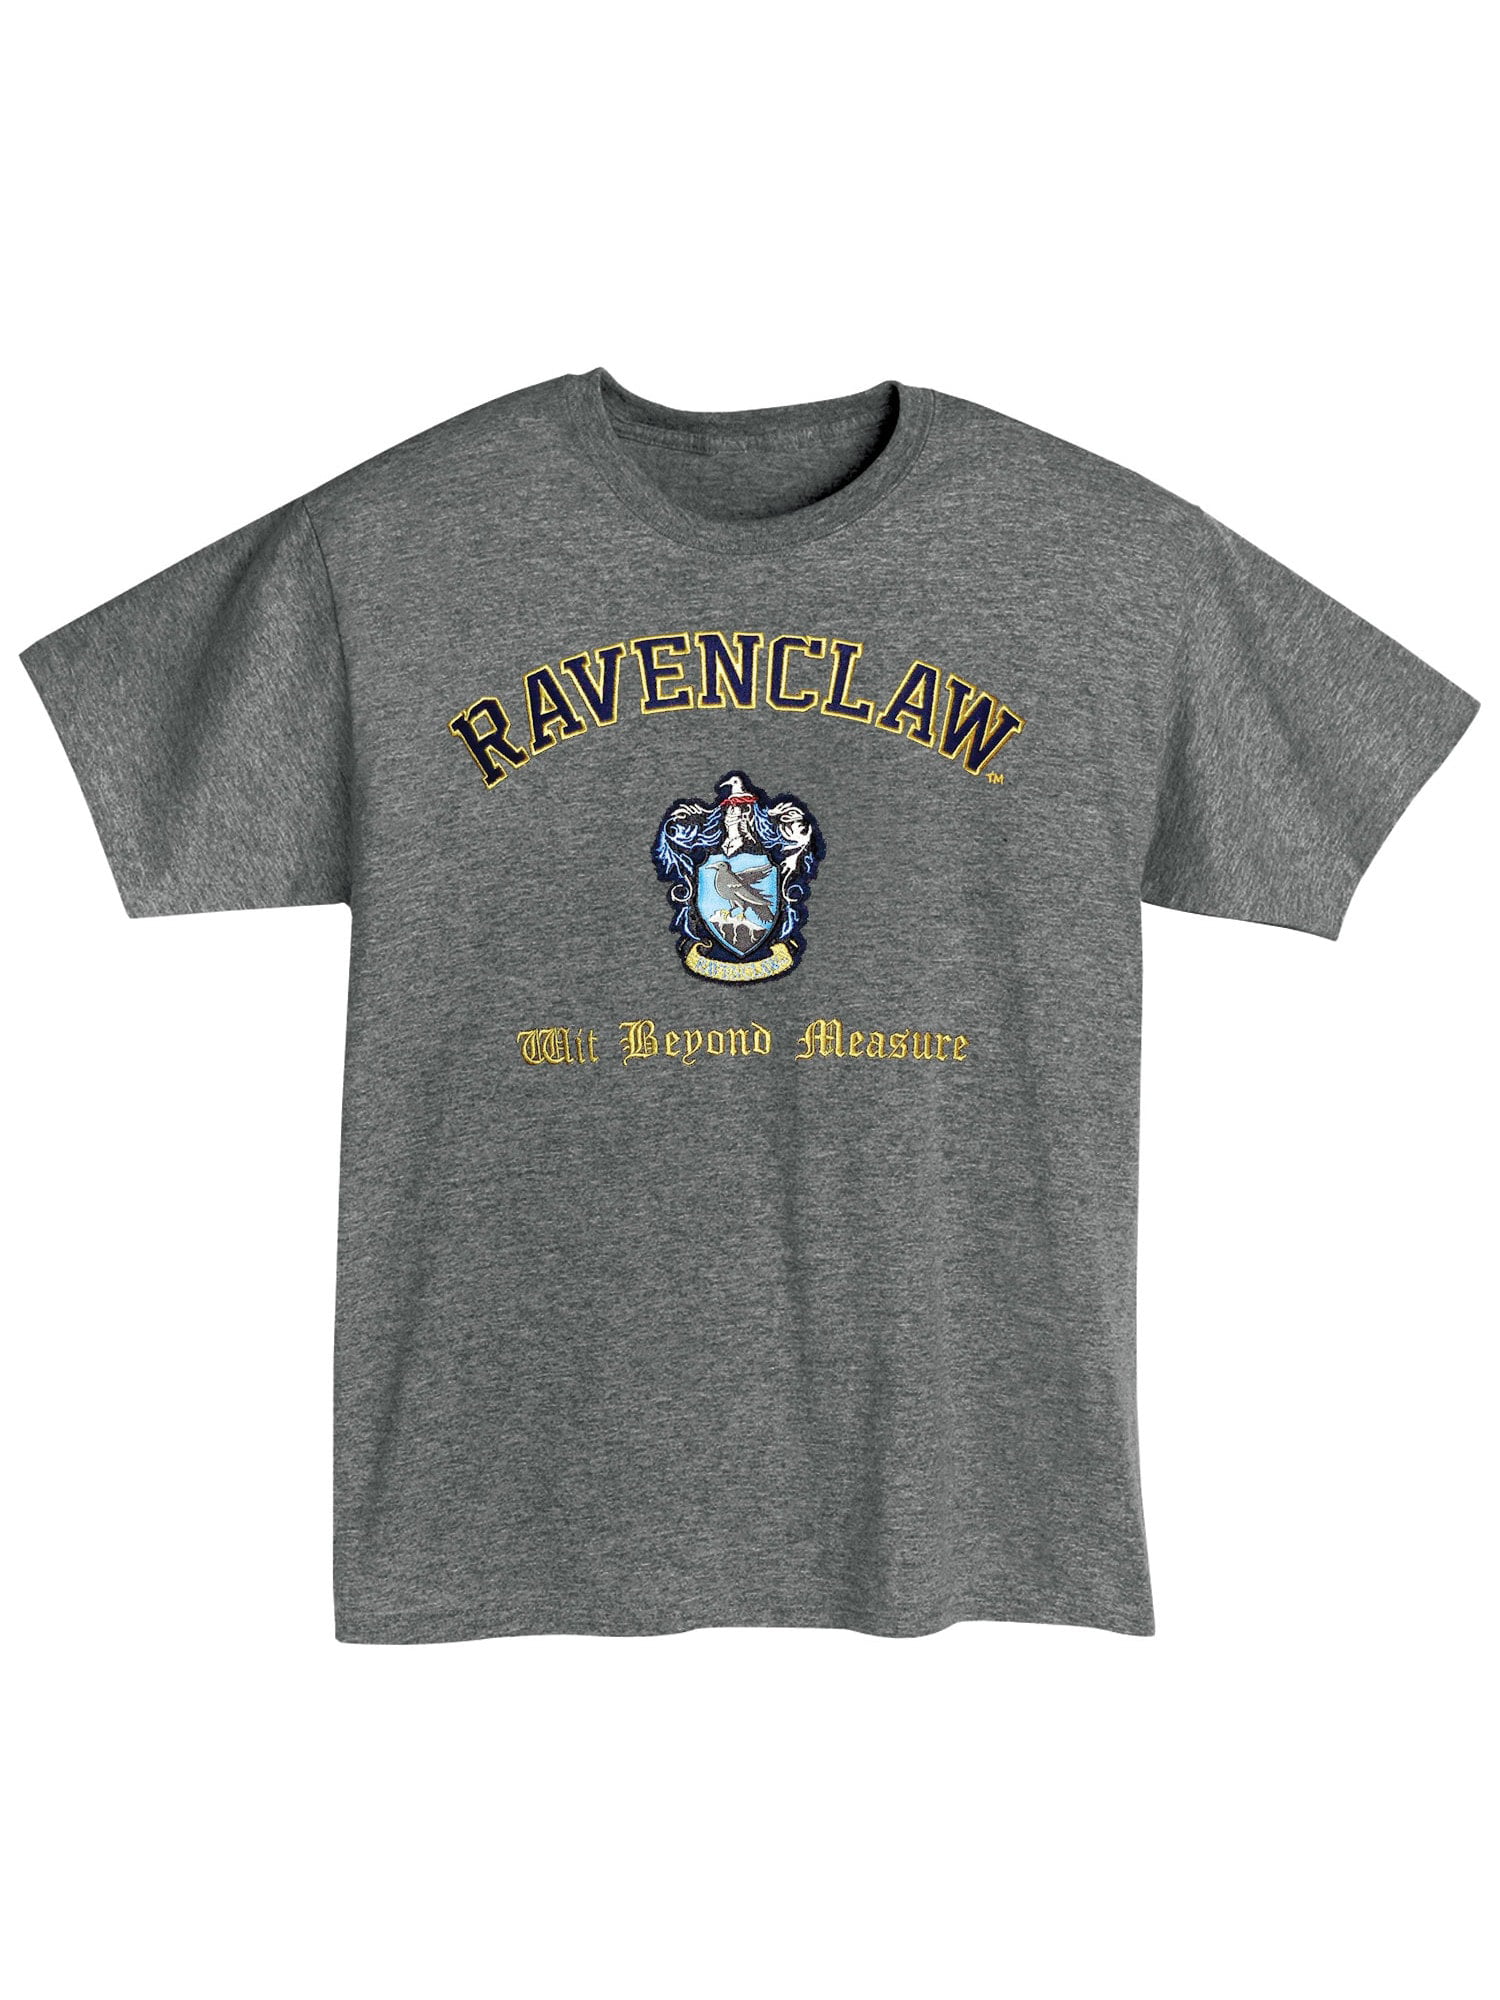 Hogwarts School T Shirt Mens Tshirt Gray T-Shirt Harry Potter Large Cotton XXL 